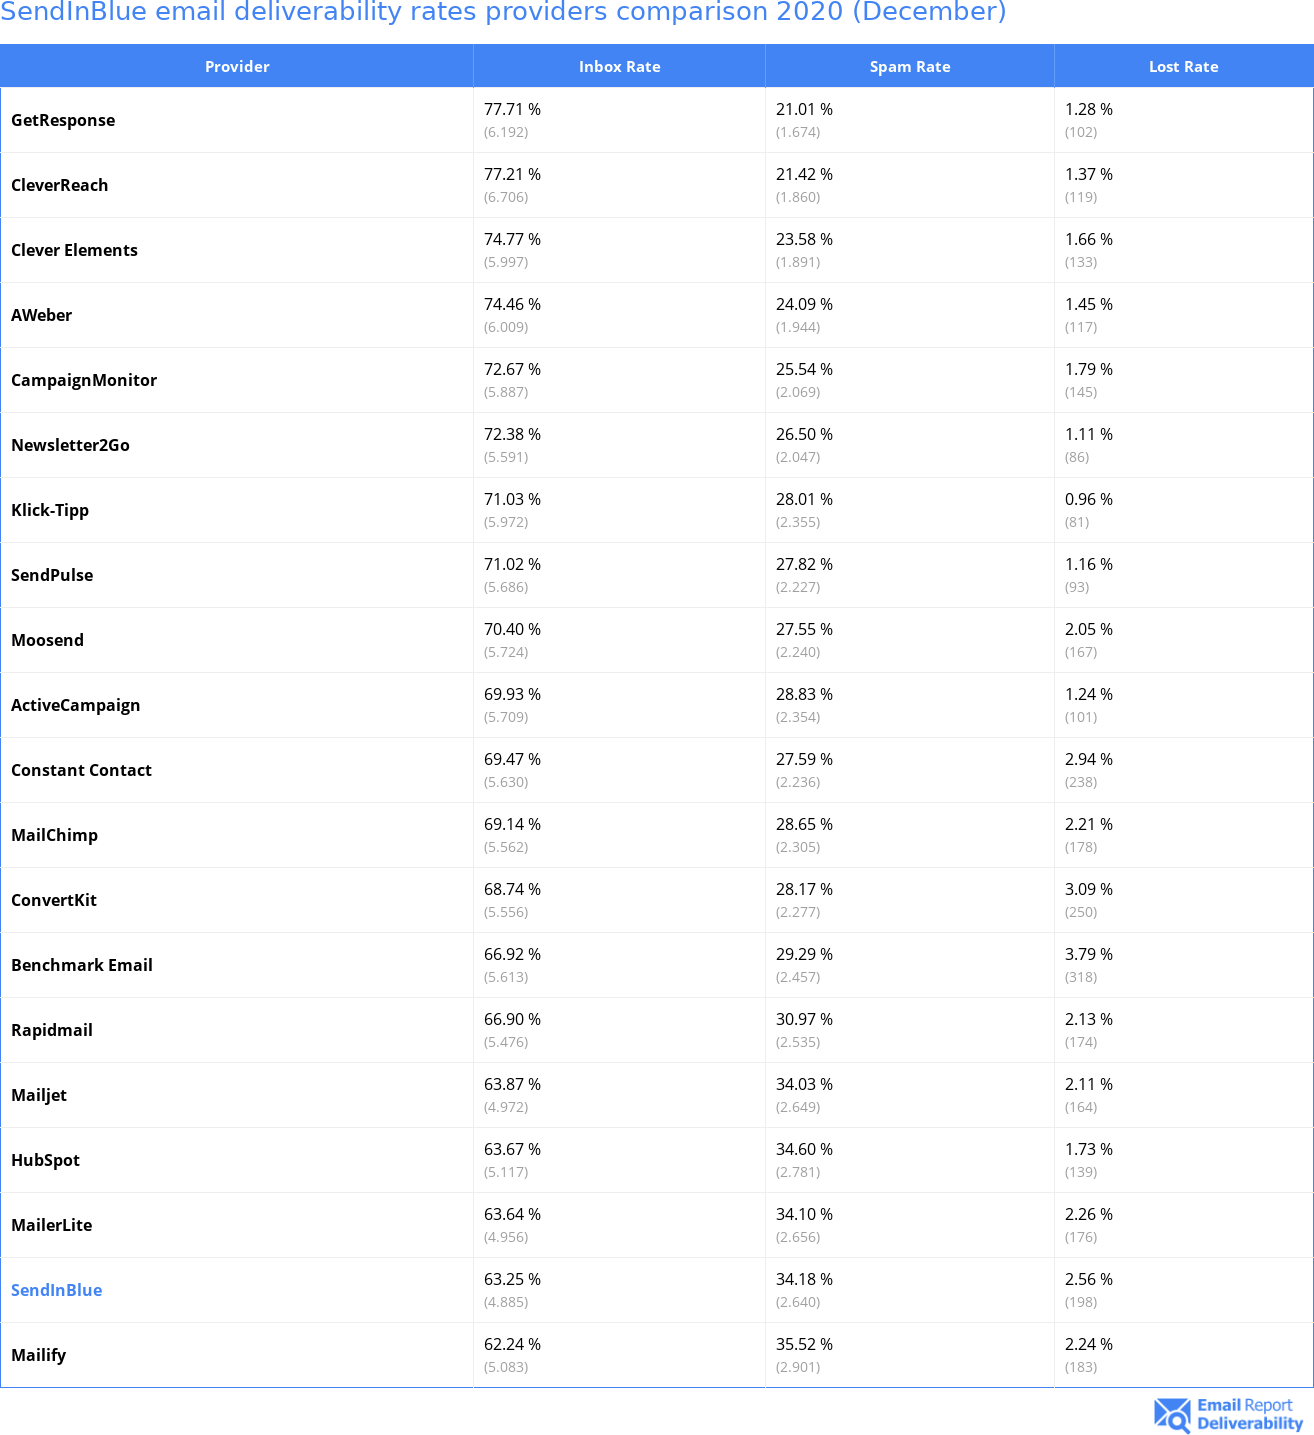 SendInBlue email deliverability rates providers comparison 2020 (December)